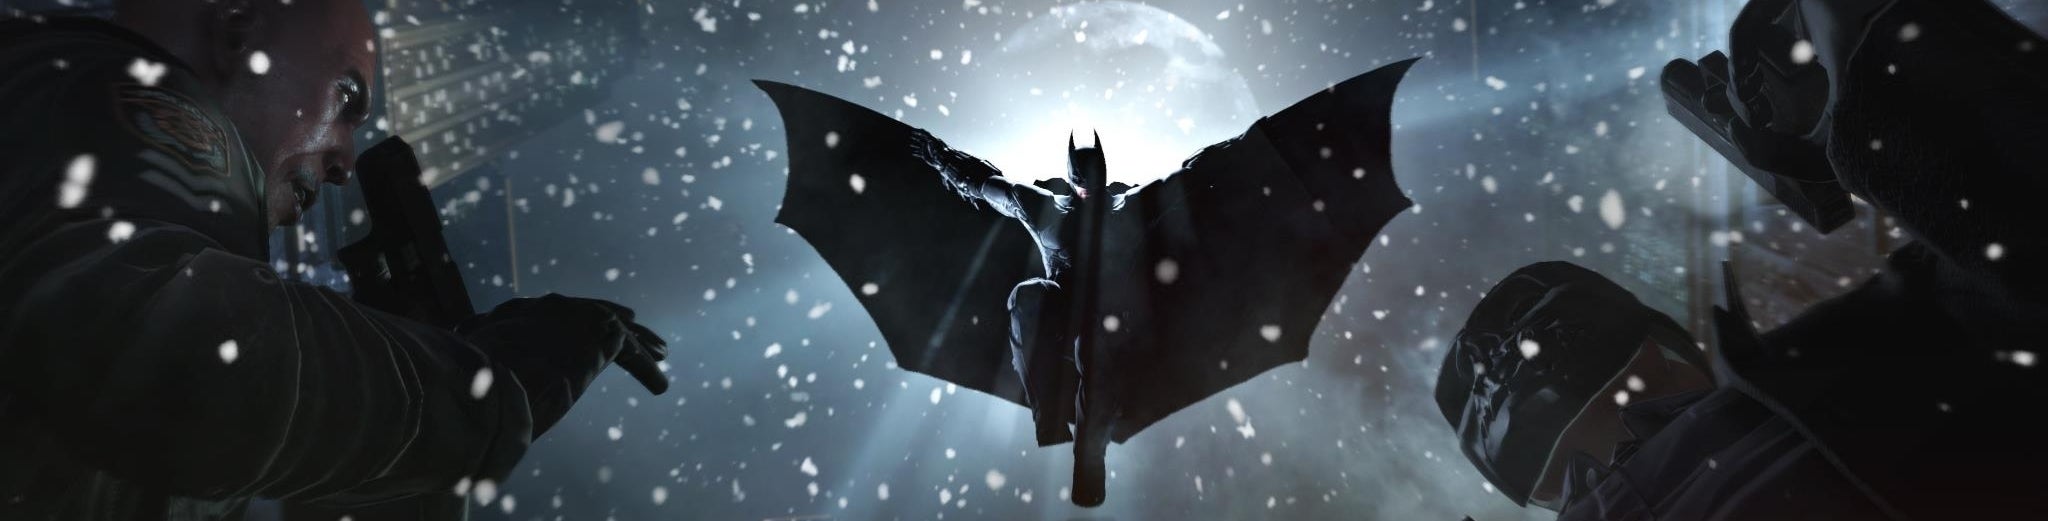 Obrazki dla Batman: Arkham Origins - Recenzja